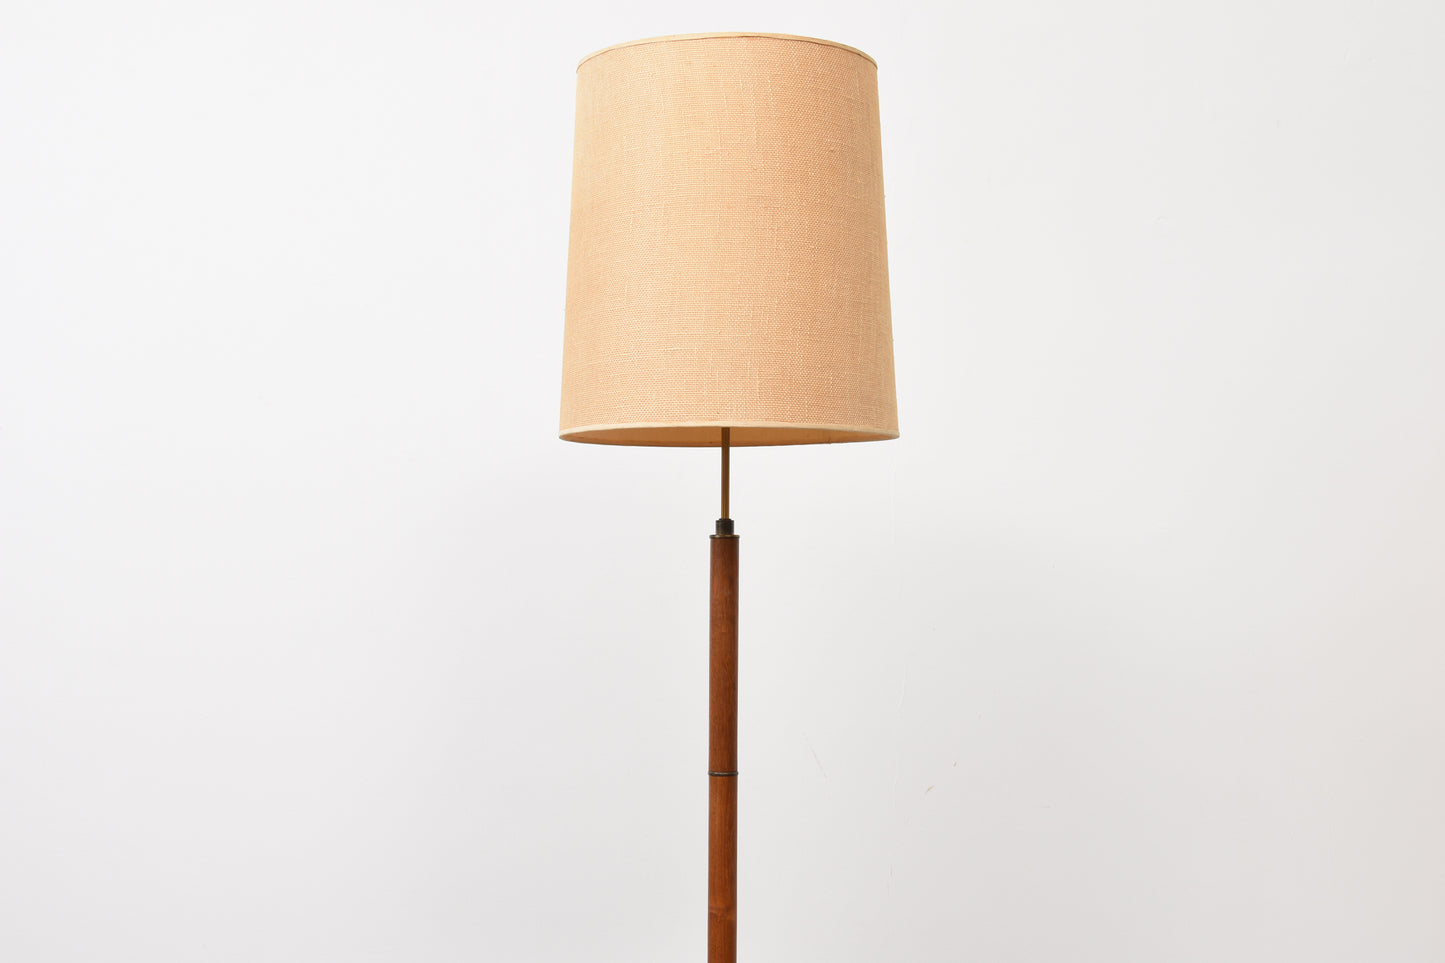 Teak floor lamp with hessian shade